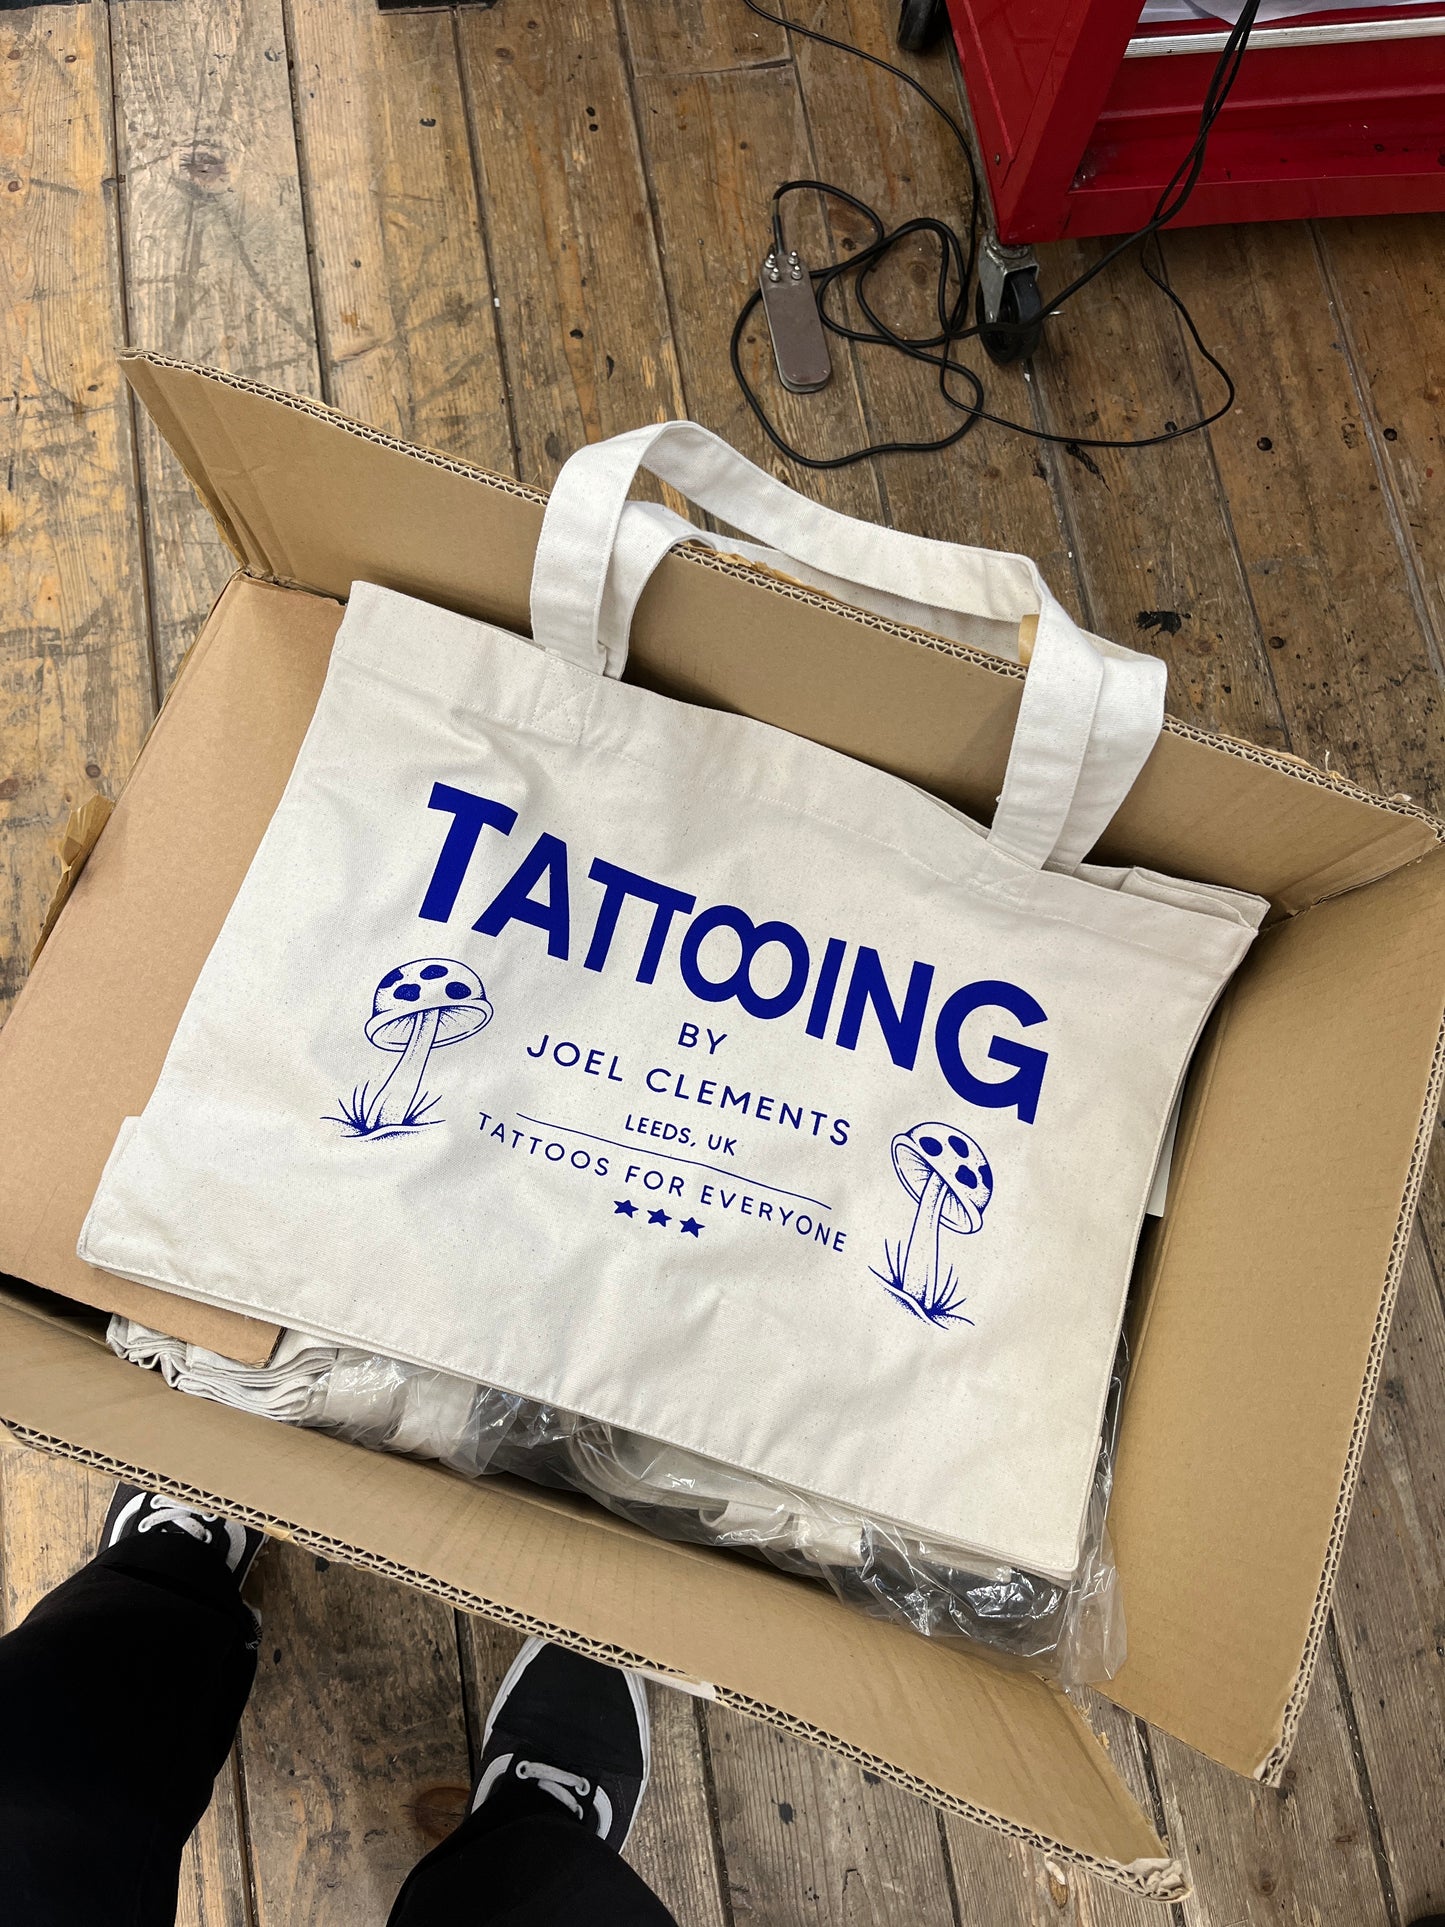 Tattoos for Everyone Tote Bag